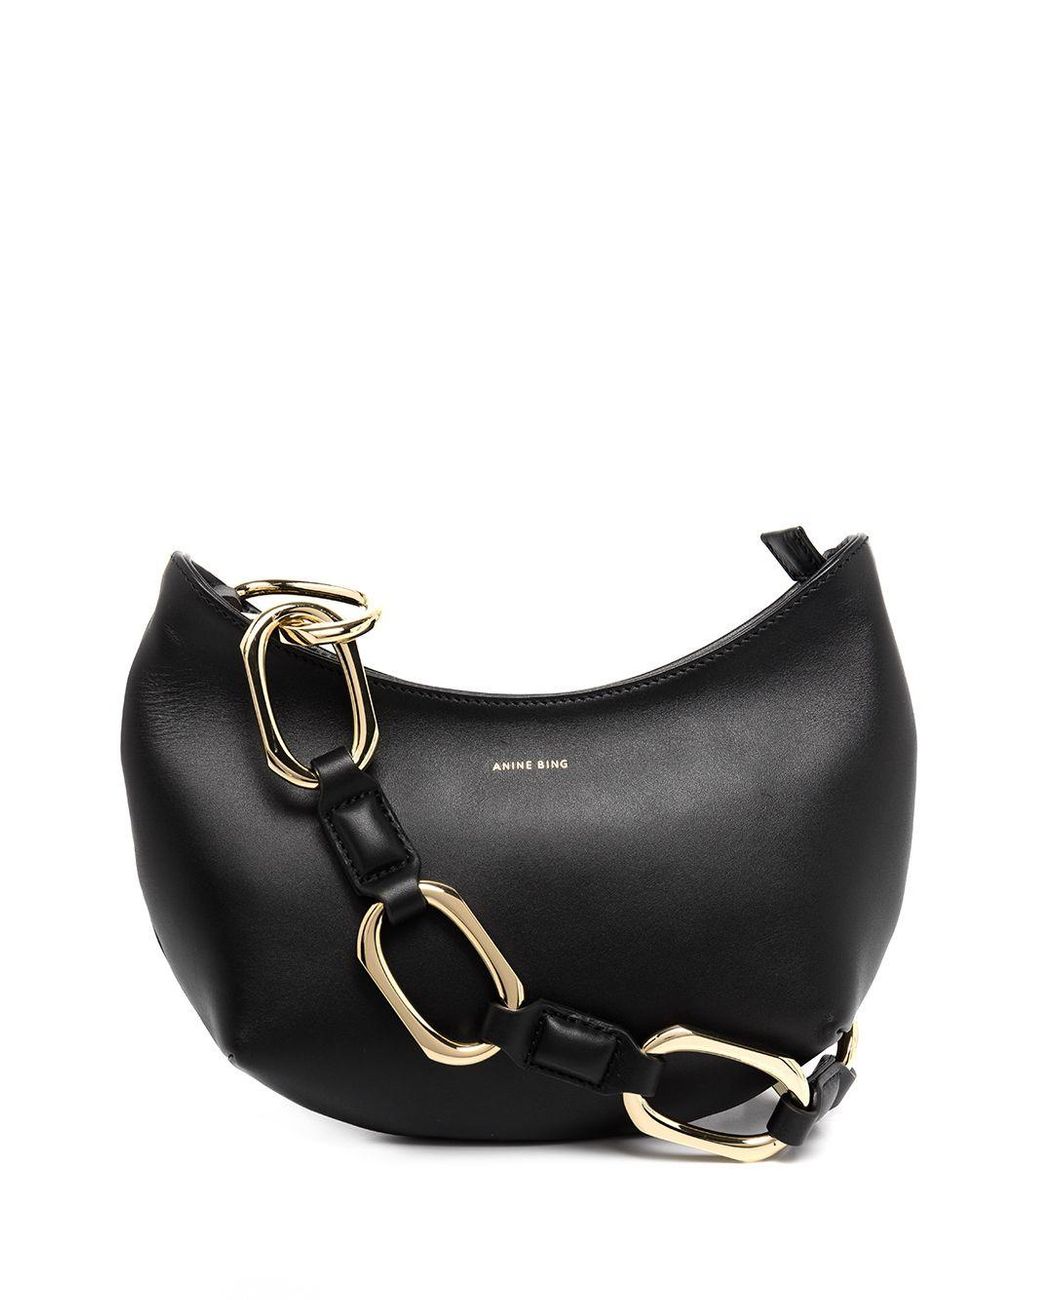 Anine Bing Leather Mini Jody Bag in Black | Lyst